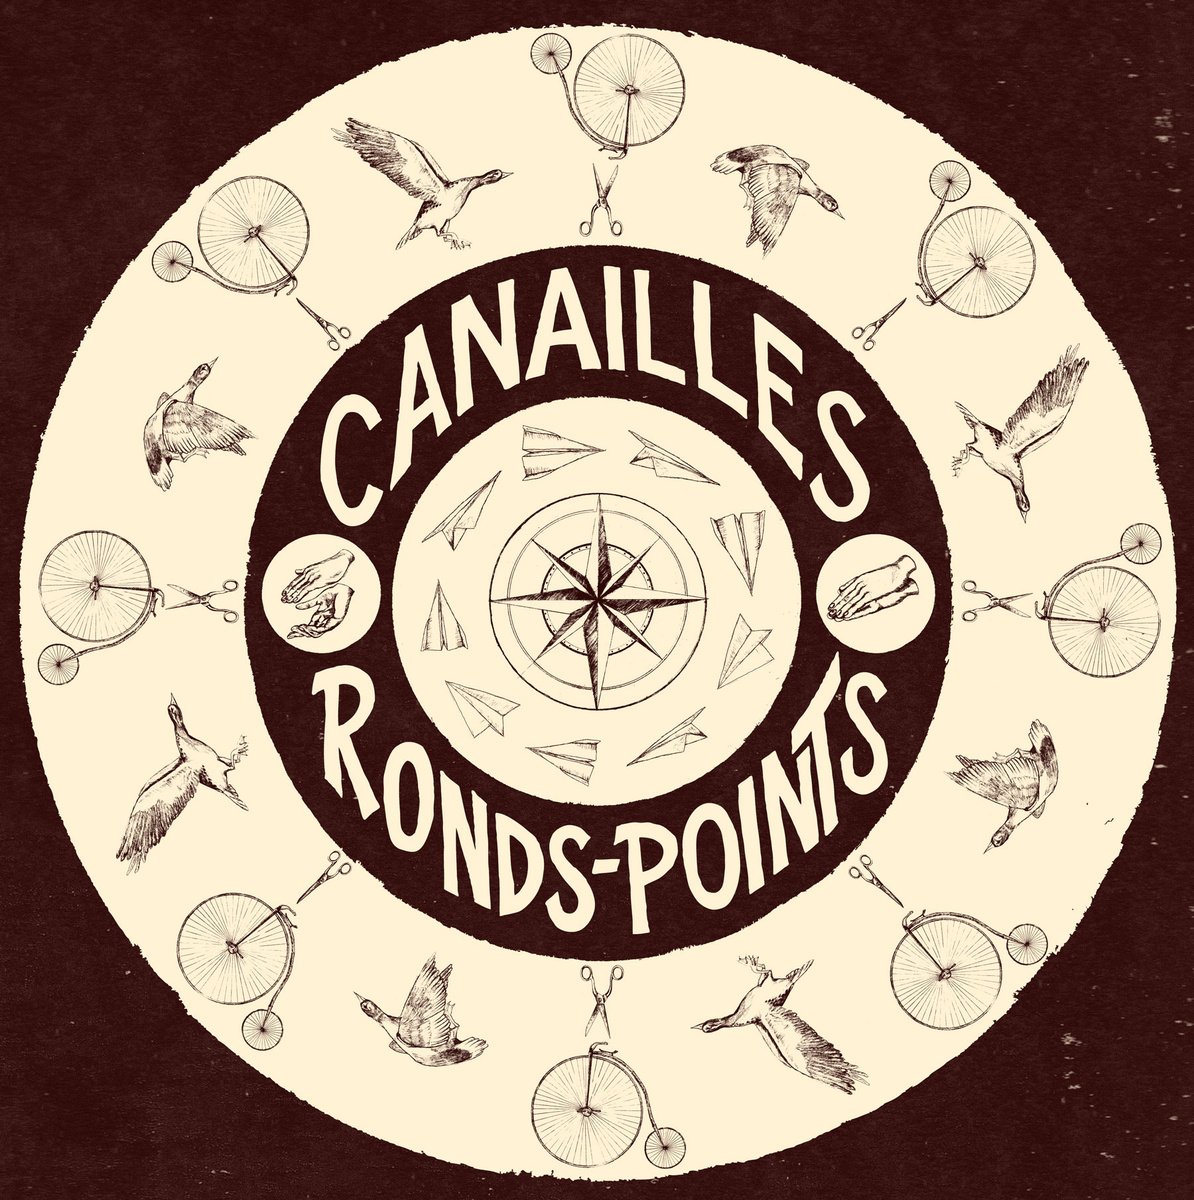 Canailles - Ronds-points